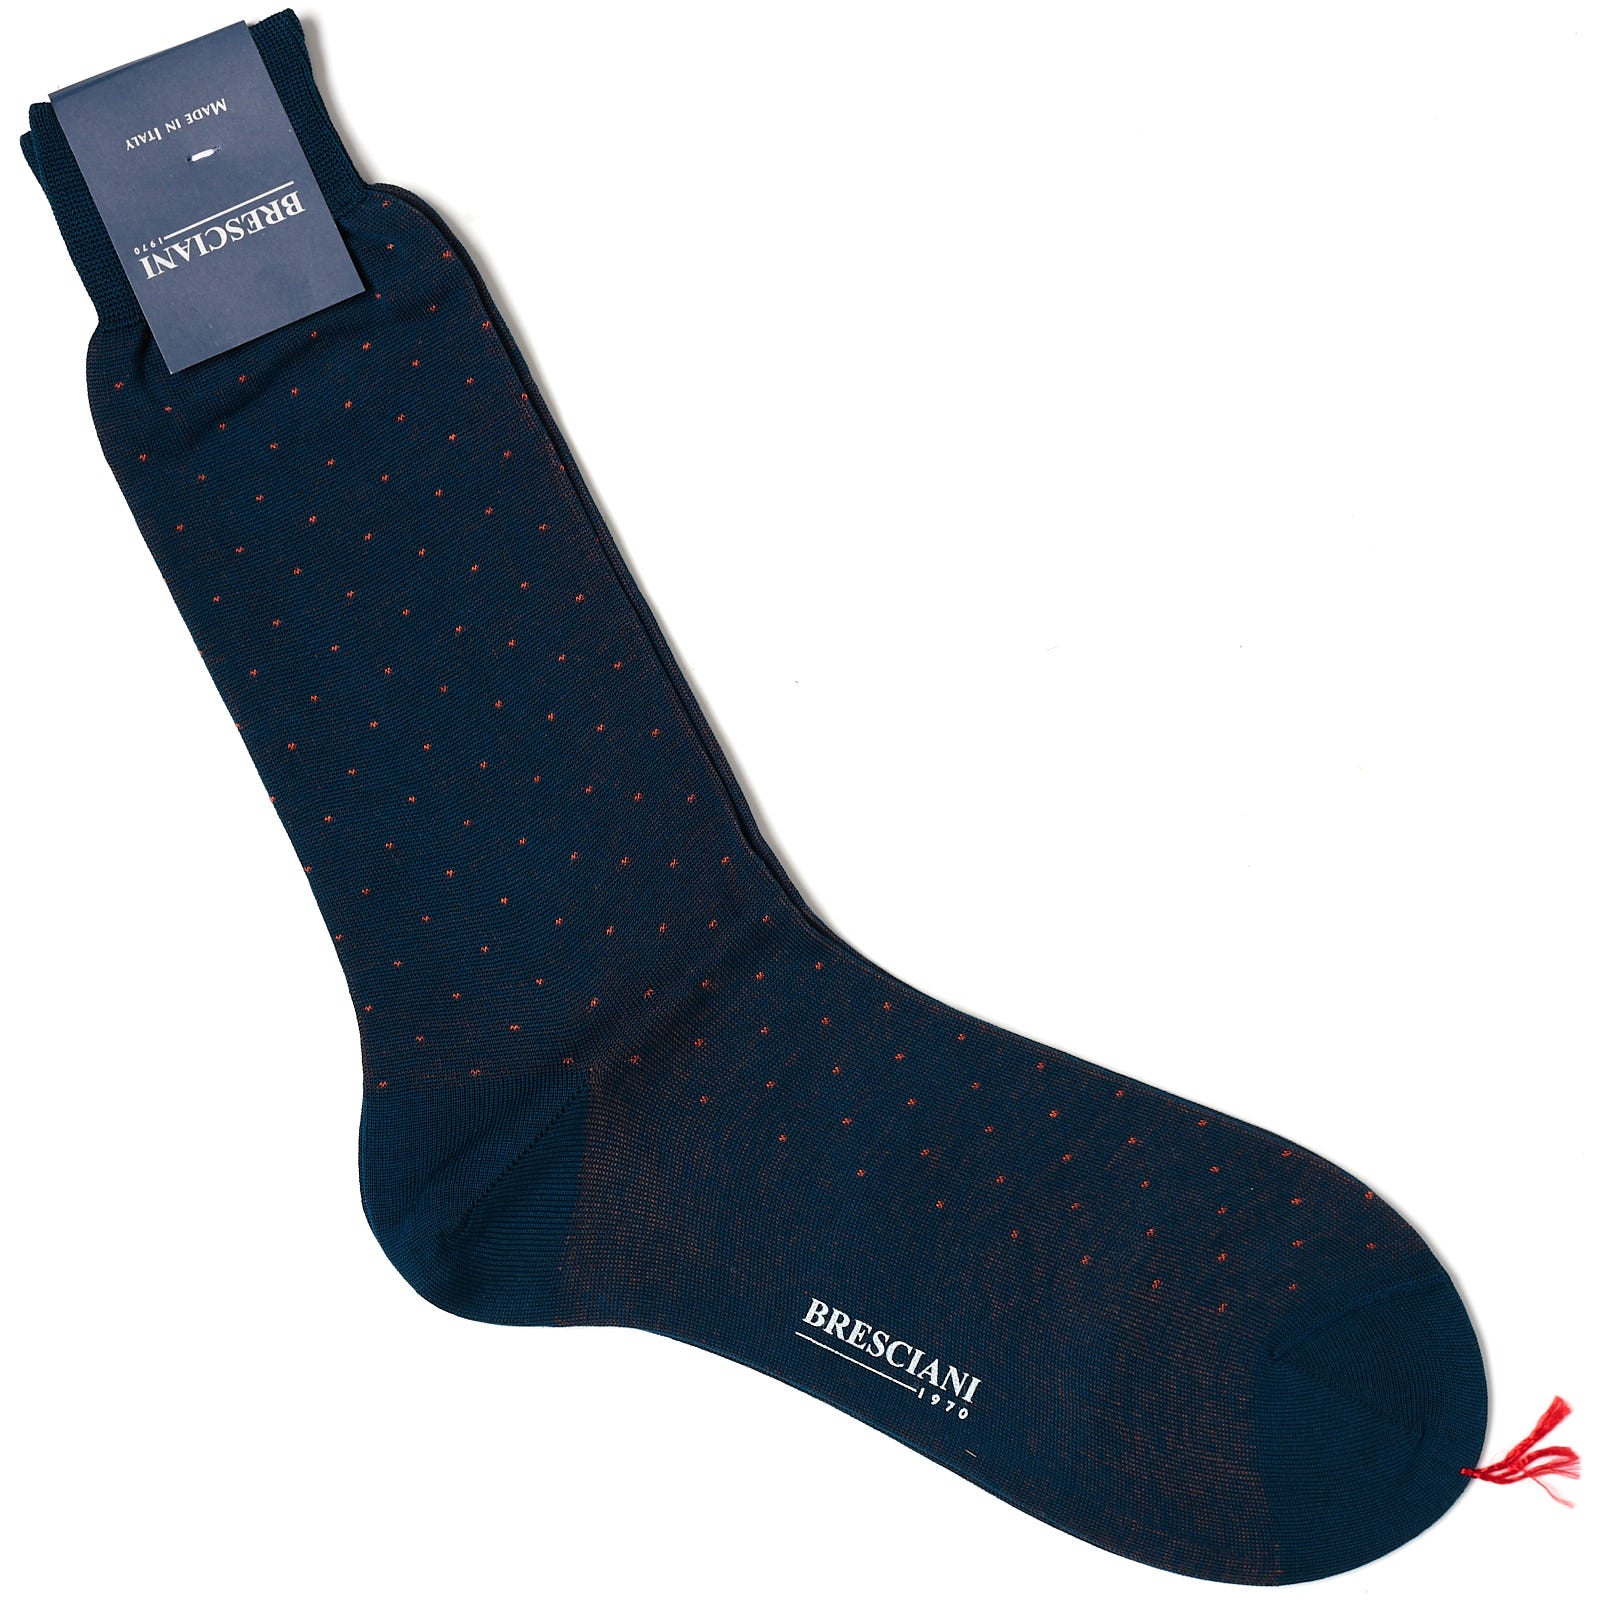 BRESCIANI Cotton Polka Dot Design Mid Calf Length Socks M-L BRESCIANI